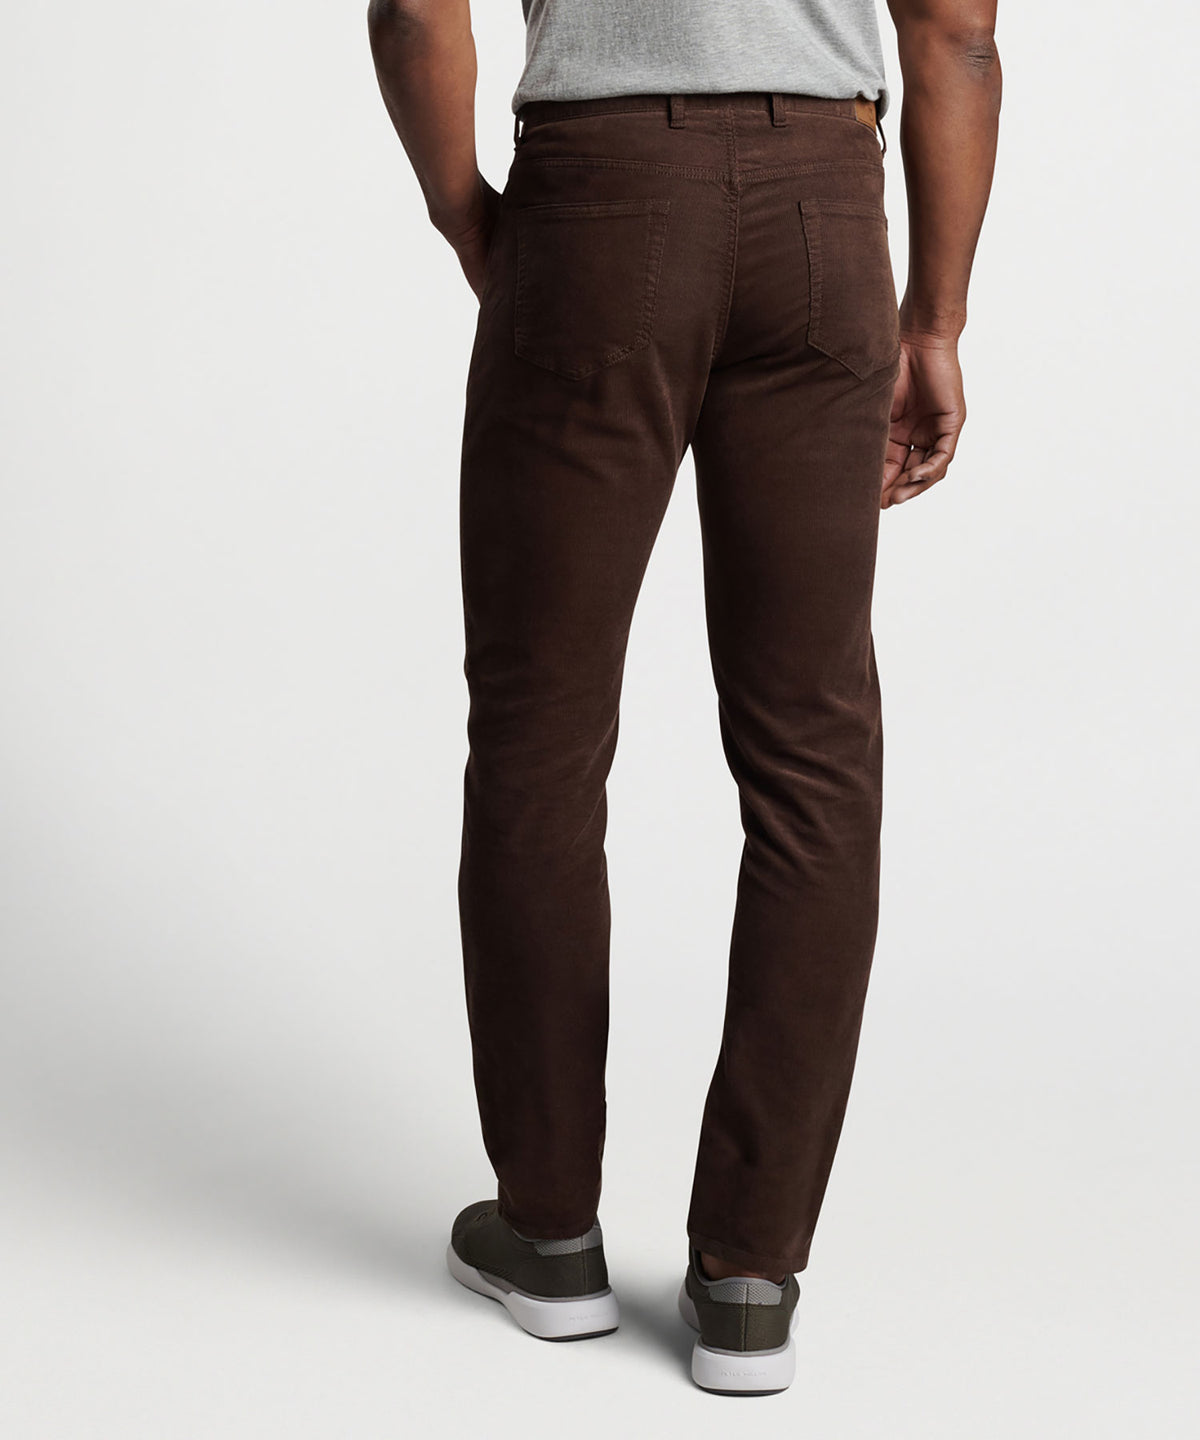 Peter Millar Corduroy 5-Pocket Pant, Men's Big & Tall